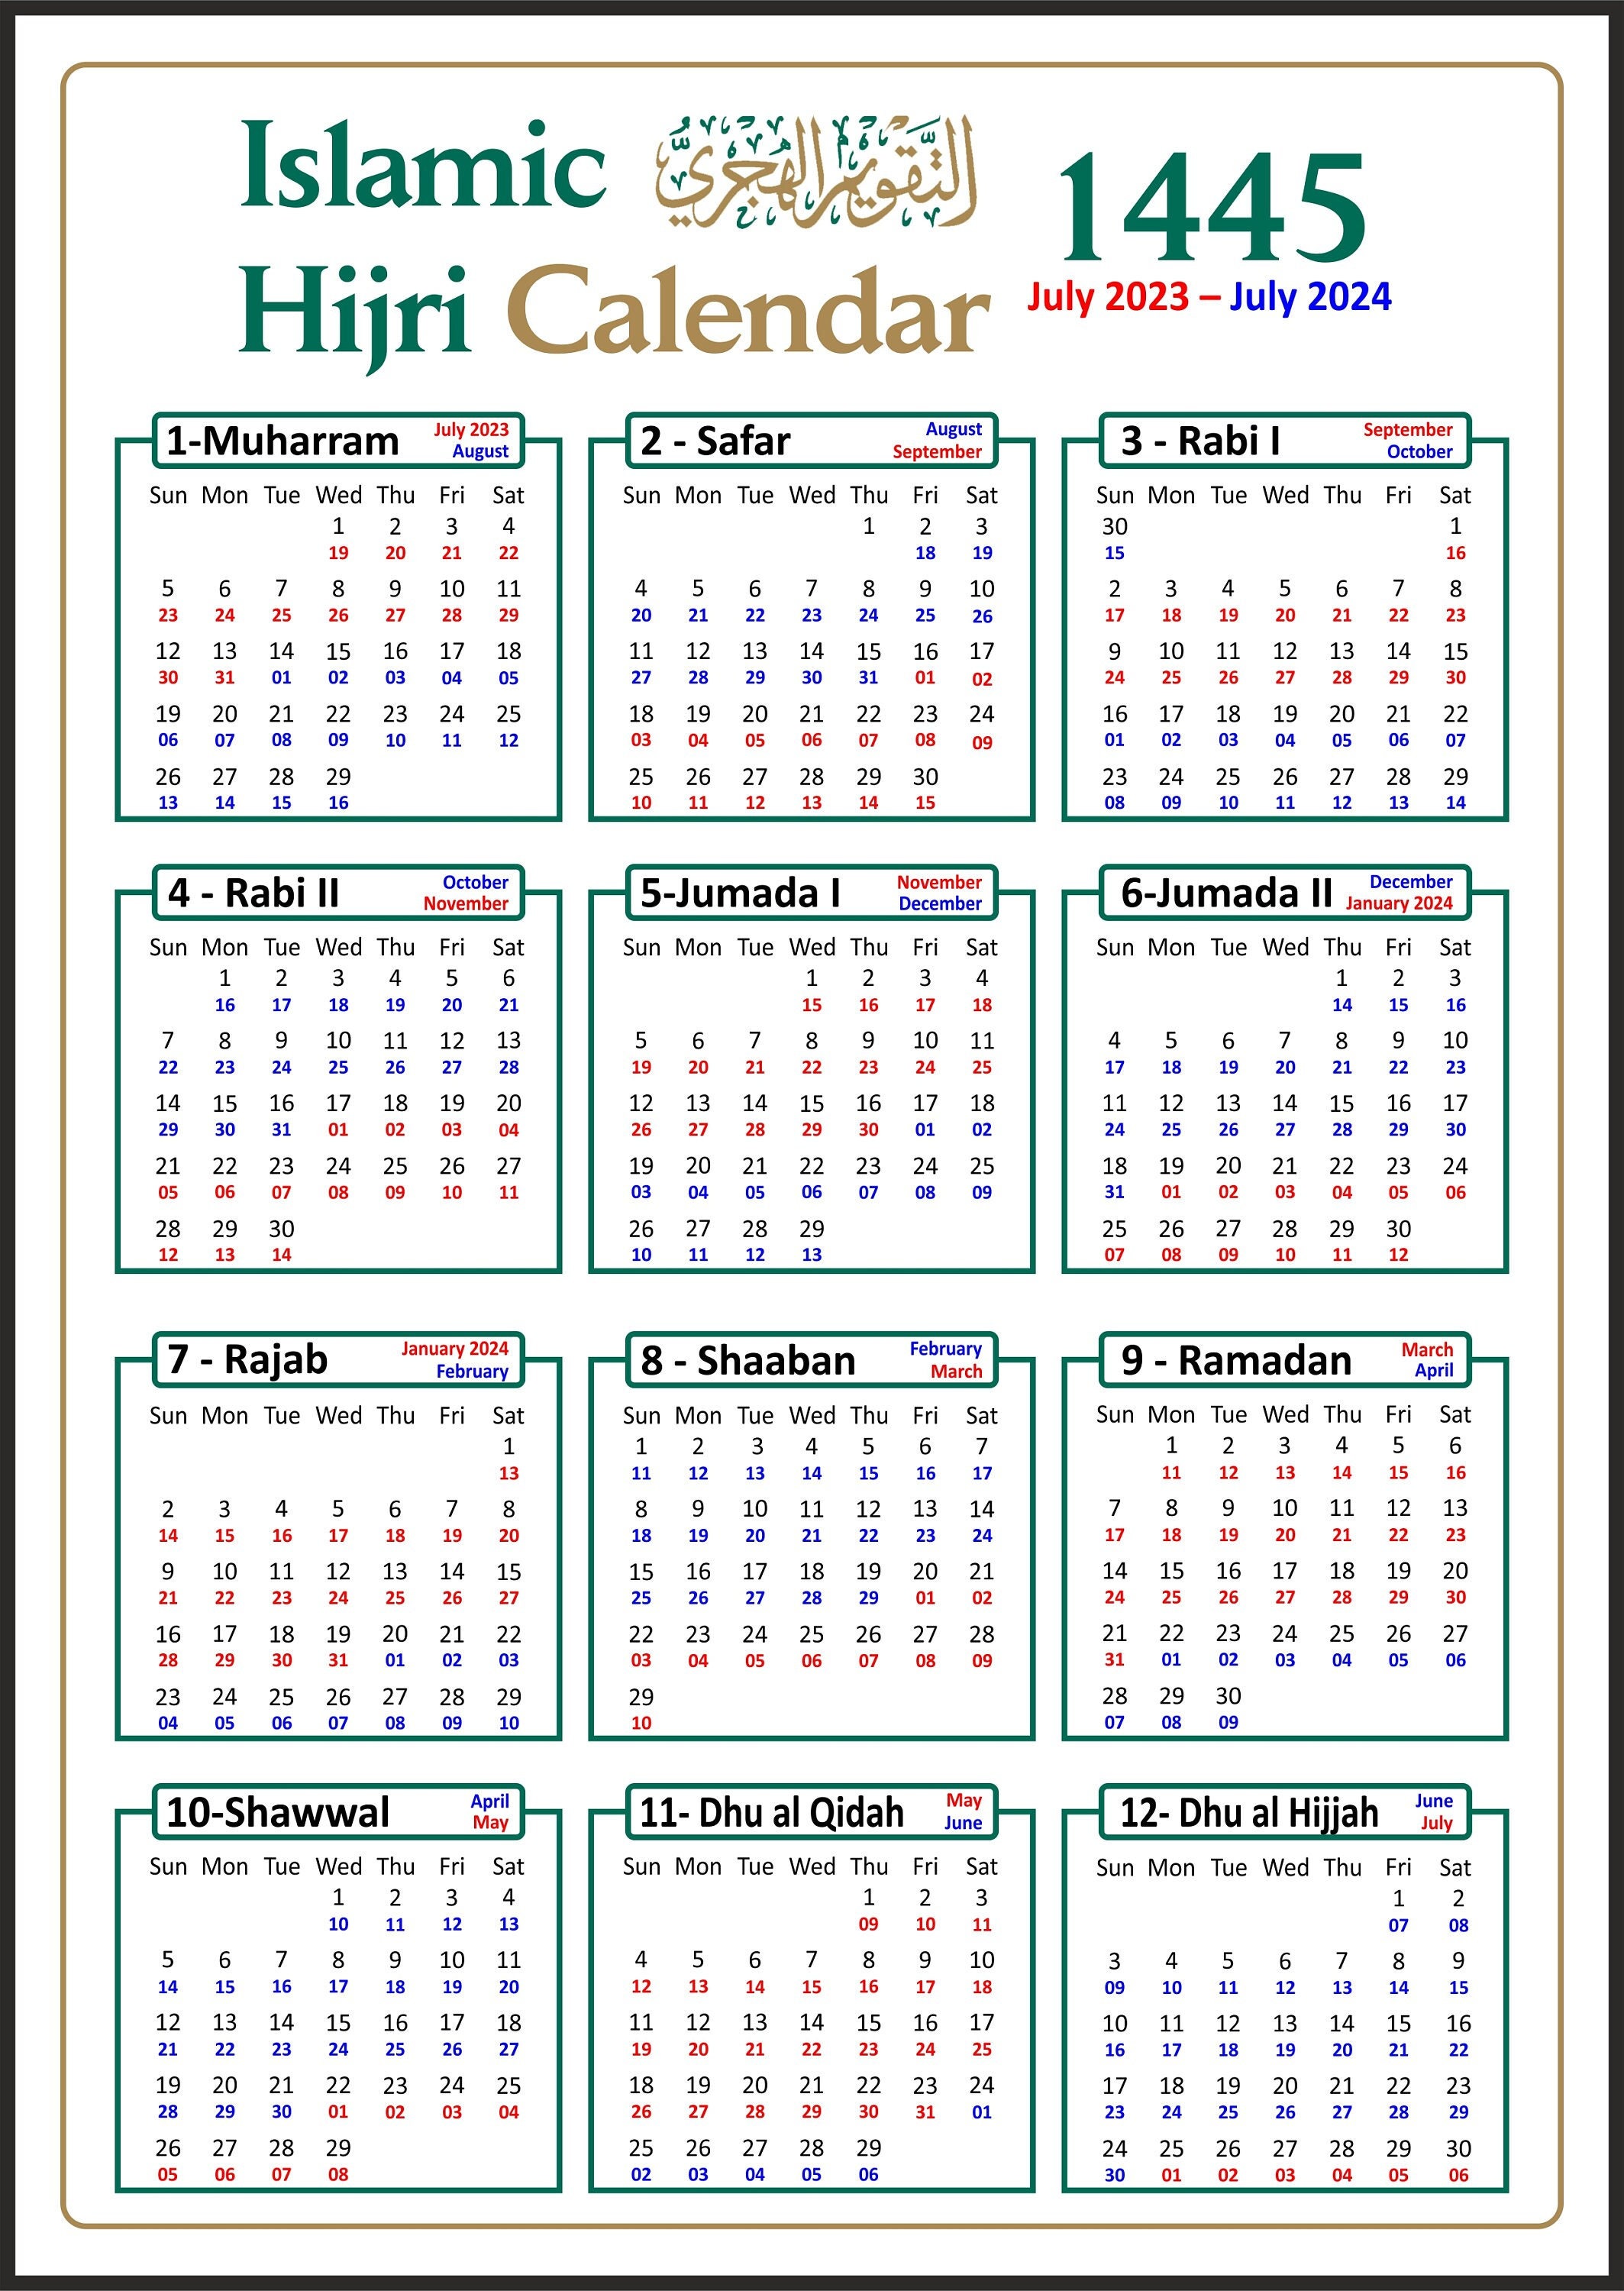 Free Printable Islamic Hijri Calendar Pdf Islamic Calendar The Best